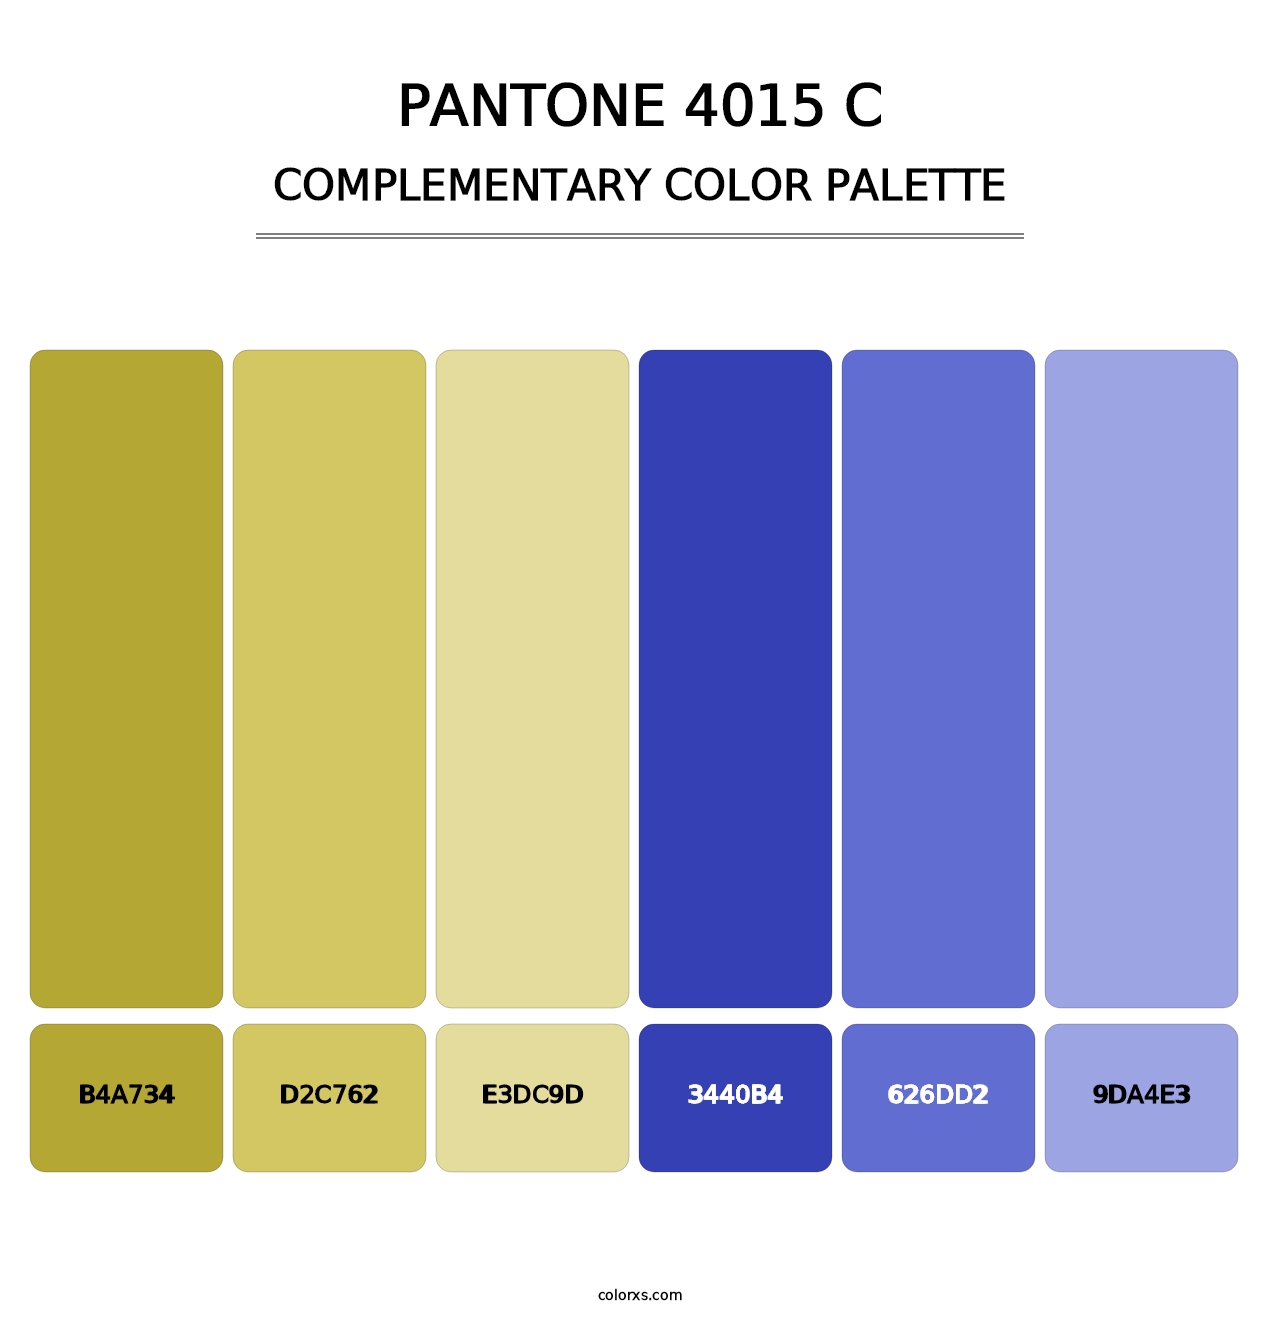 PANTONE 4015 C - Complementary Color Palette